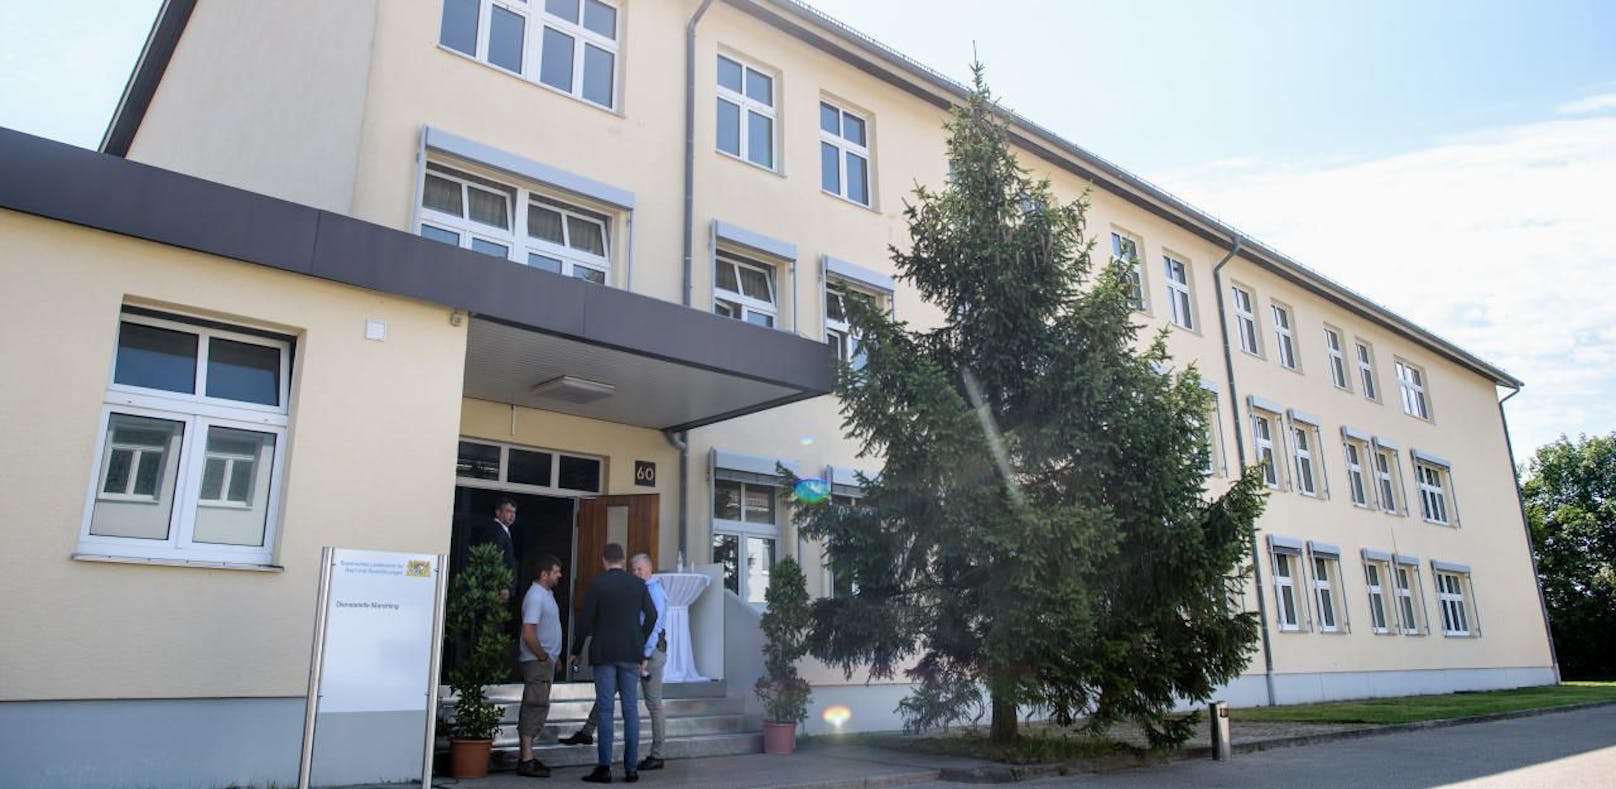 Asyl-Ankerzentren in Bayern ab heute in Betrieb